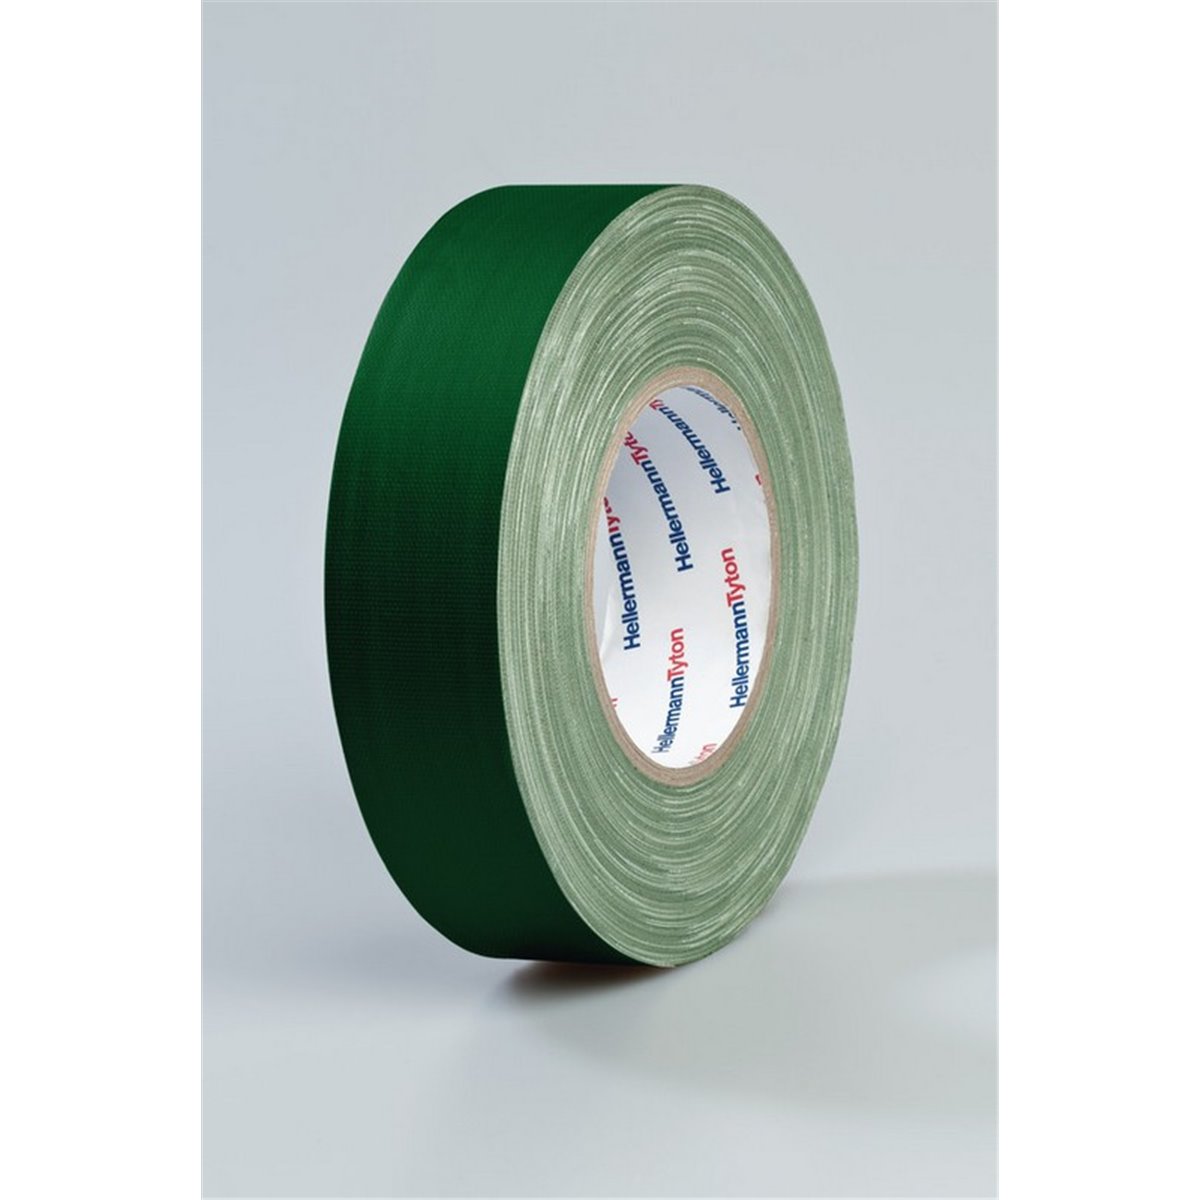 Taśma tekstylna HTAPE-TEX-19x50-CO-GN, 19mm x 50m, zielona HellermannTyton